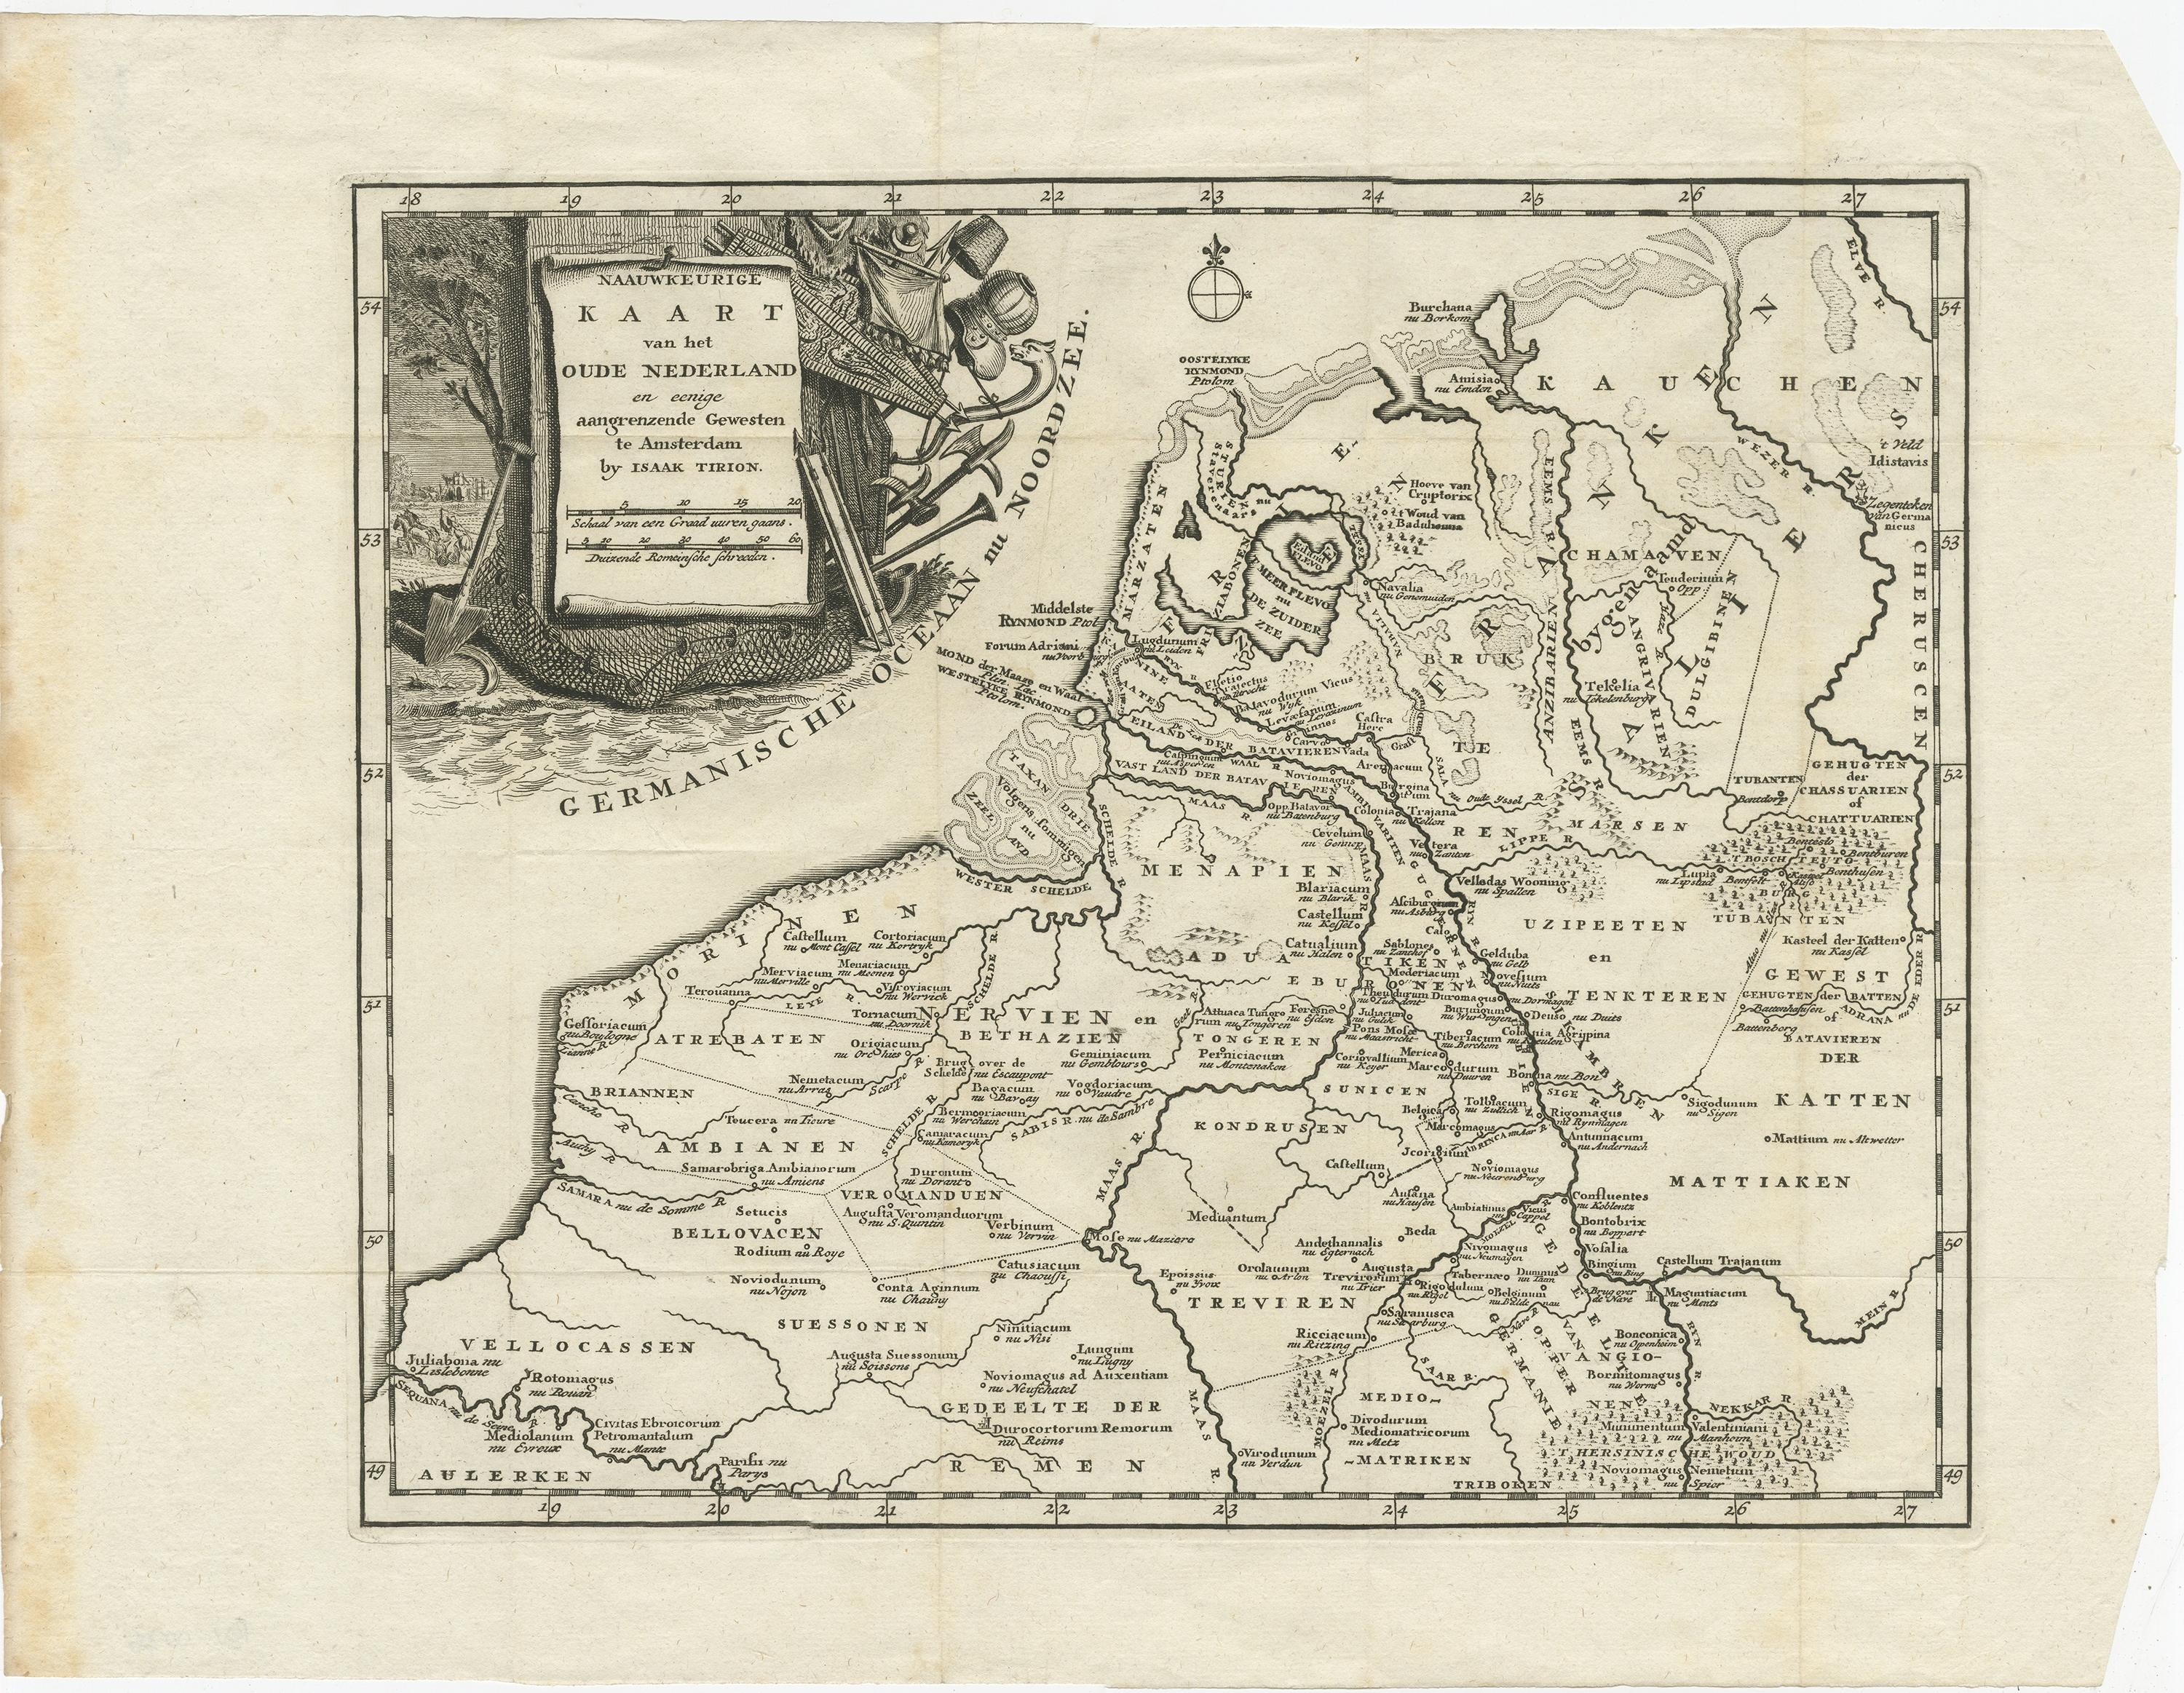 Description: Antique map titled 'Naauwkeurige Kaart van het Oude Nederland (..)'. 

Original antique map of the Netherlands and Belgium. This map originates from 'Vaderlandsche historie' by J. Wagenaar, published circa 1750. 

Artists and